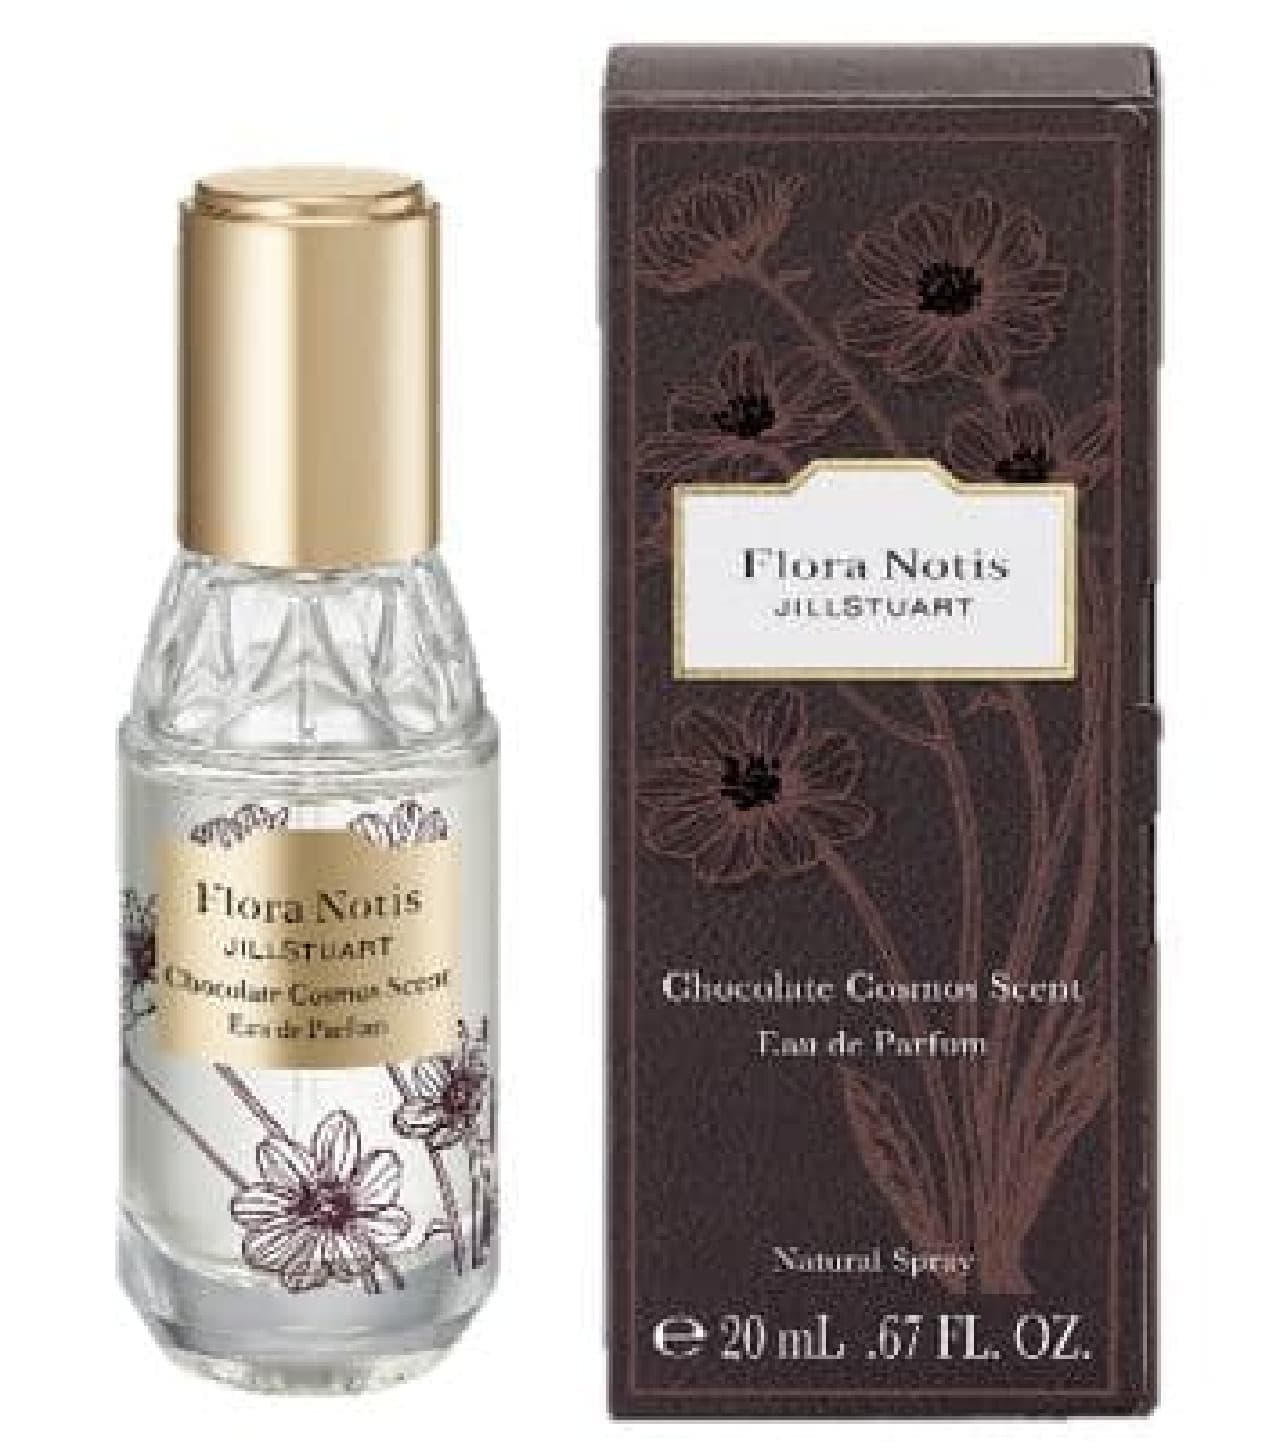 Flora Notice Jill Stuart "Chocolate Cosmos Eau de Parfum"